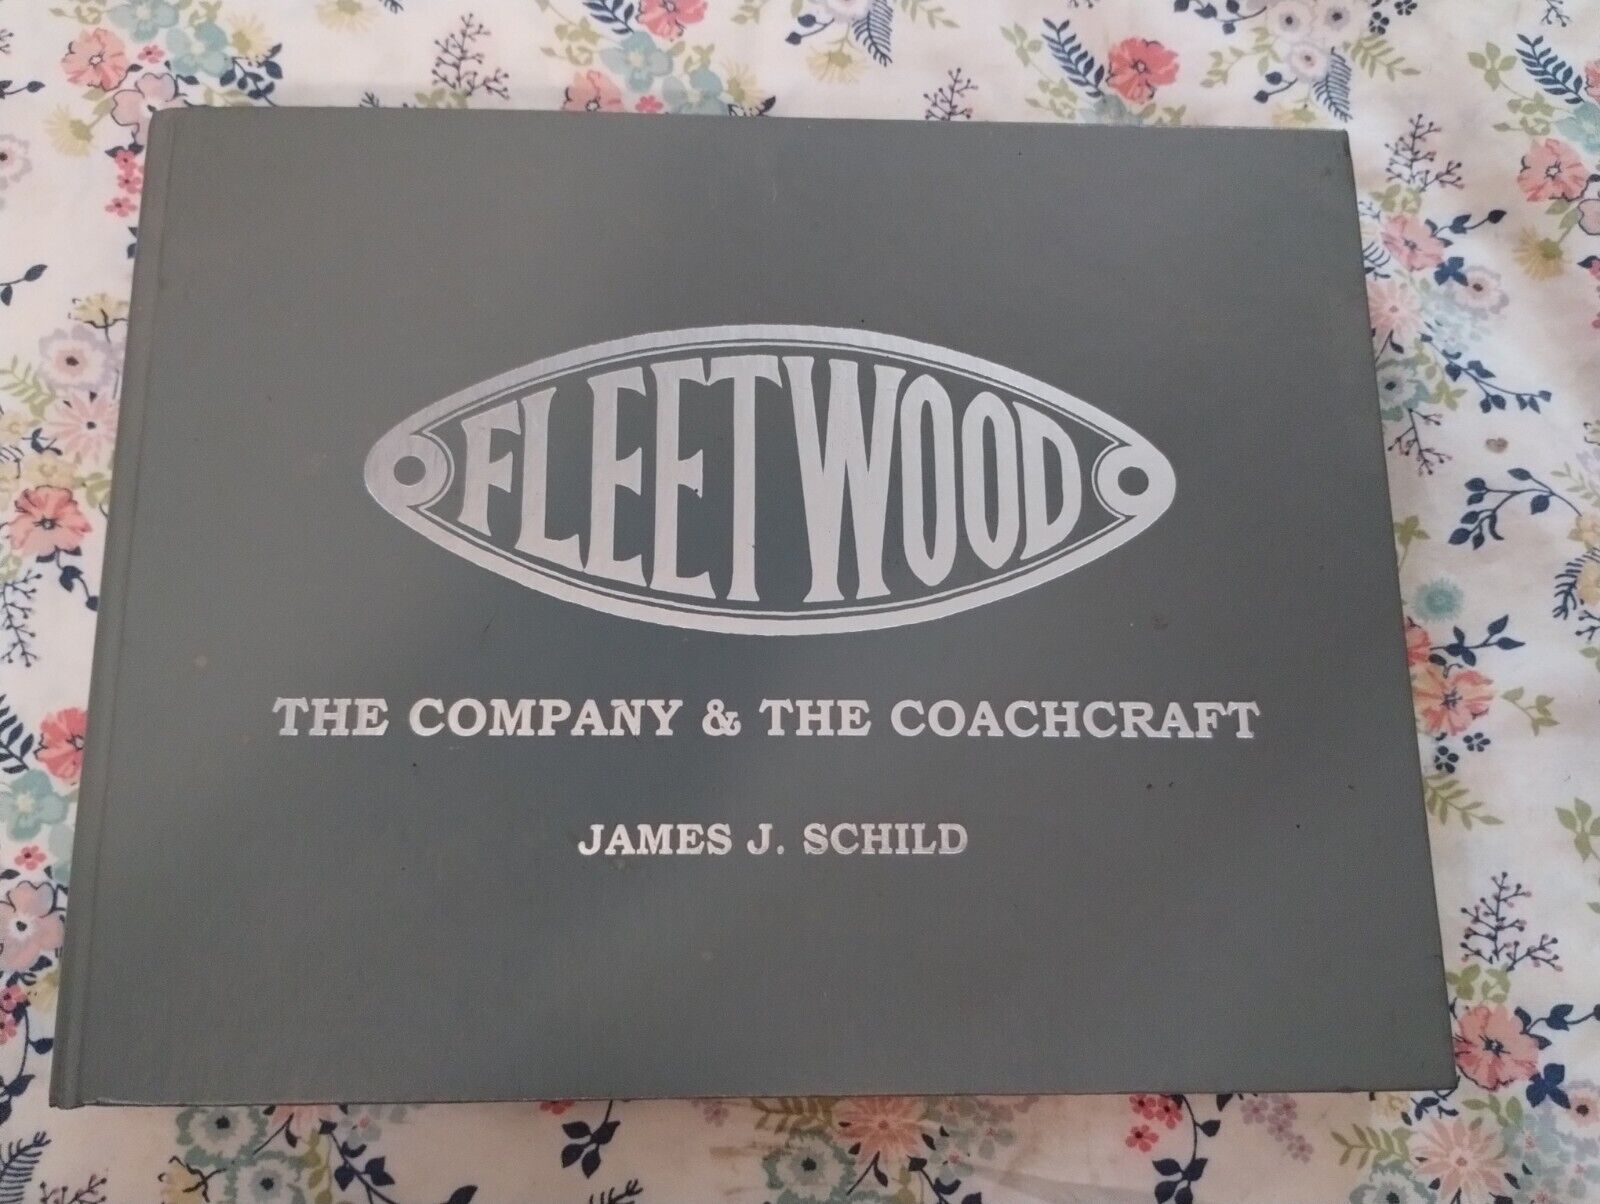 Fleetwood: The Company & The Coachcraft